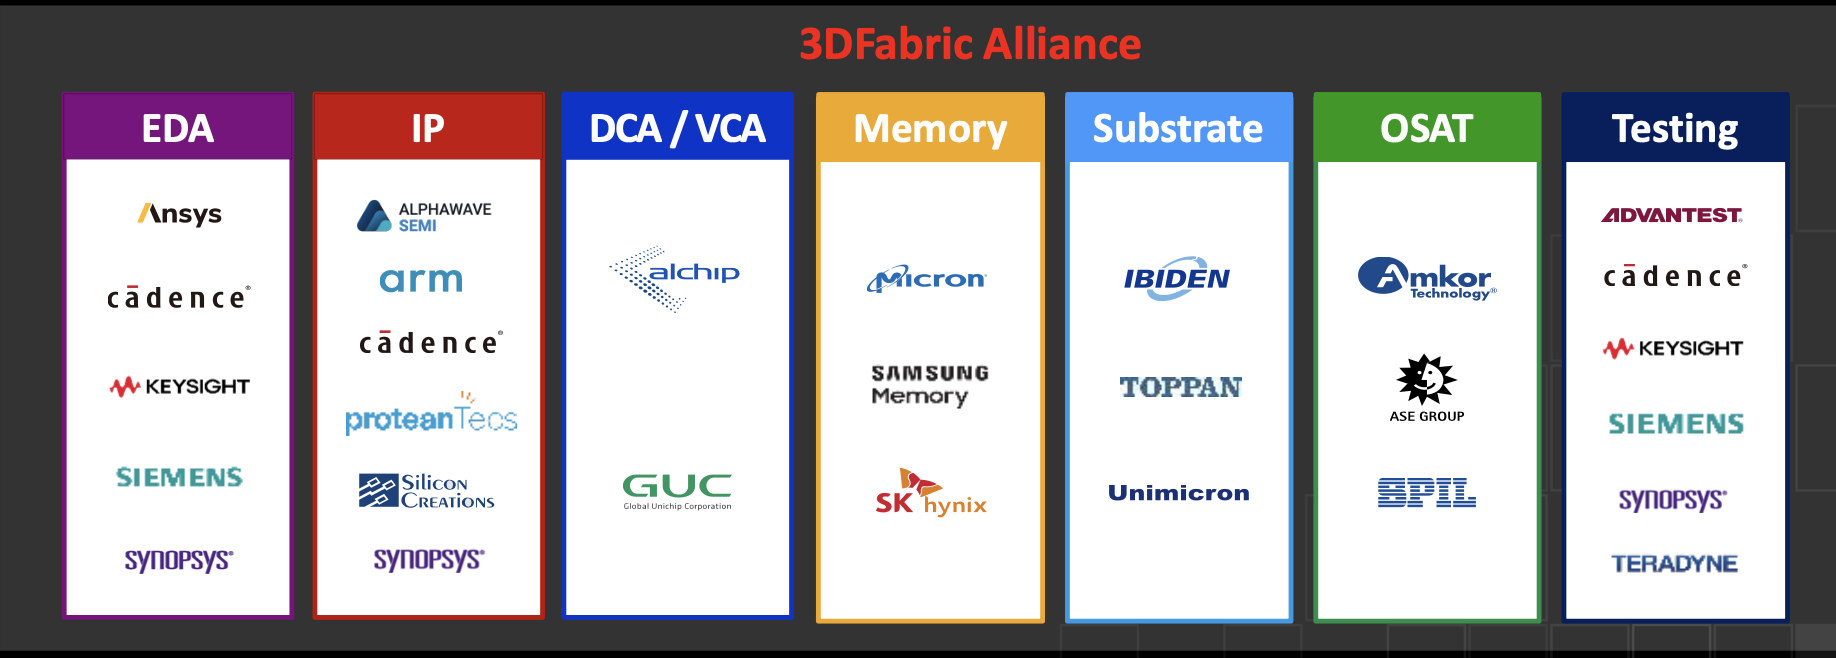 TSMC 3DFabric Alliance